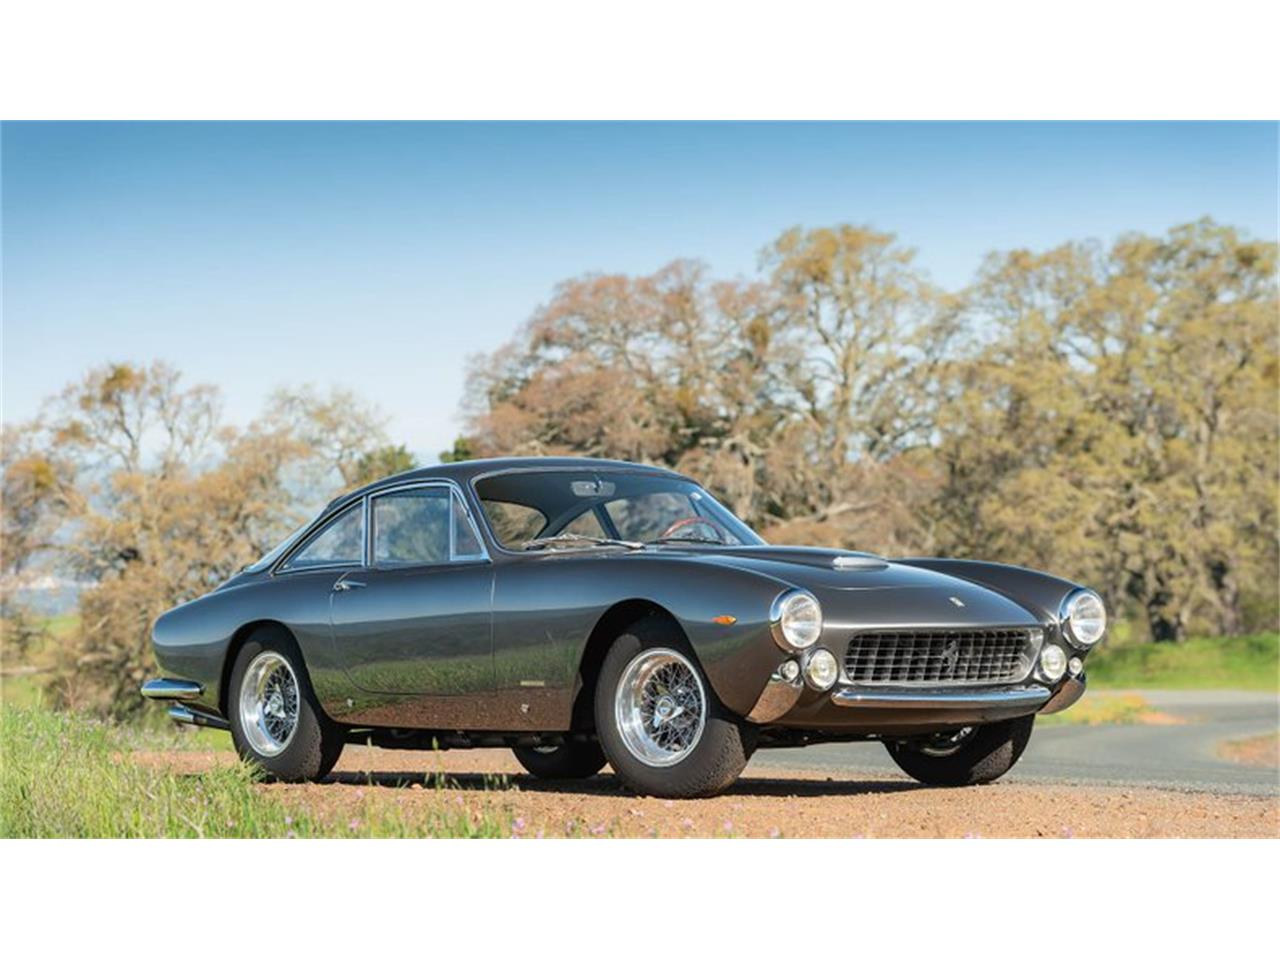 For Sale at Auction: 1964 Ferrari 250 in Monterey, California for sale in Monterey, CA